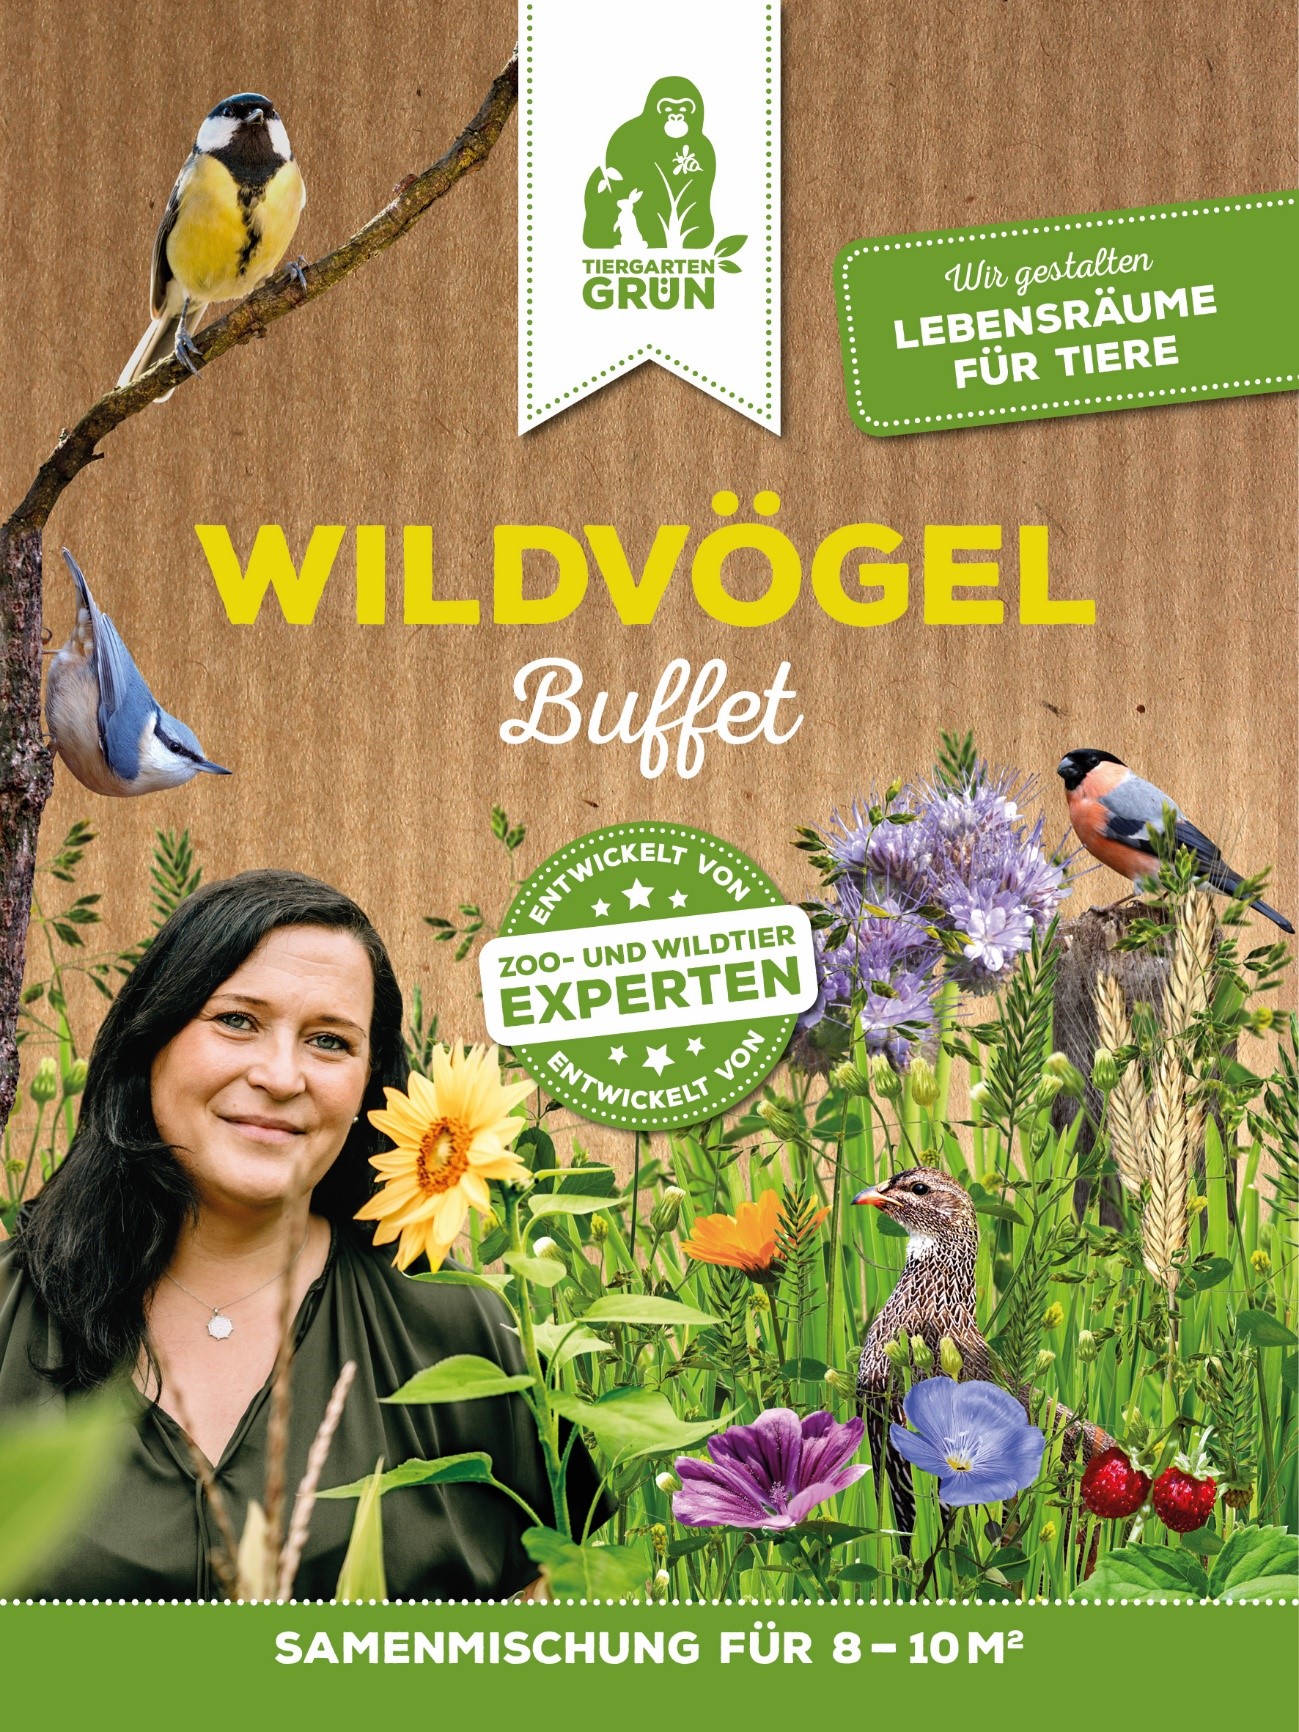 Tiergartengrün Wildvogel Buffet